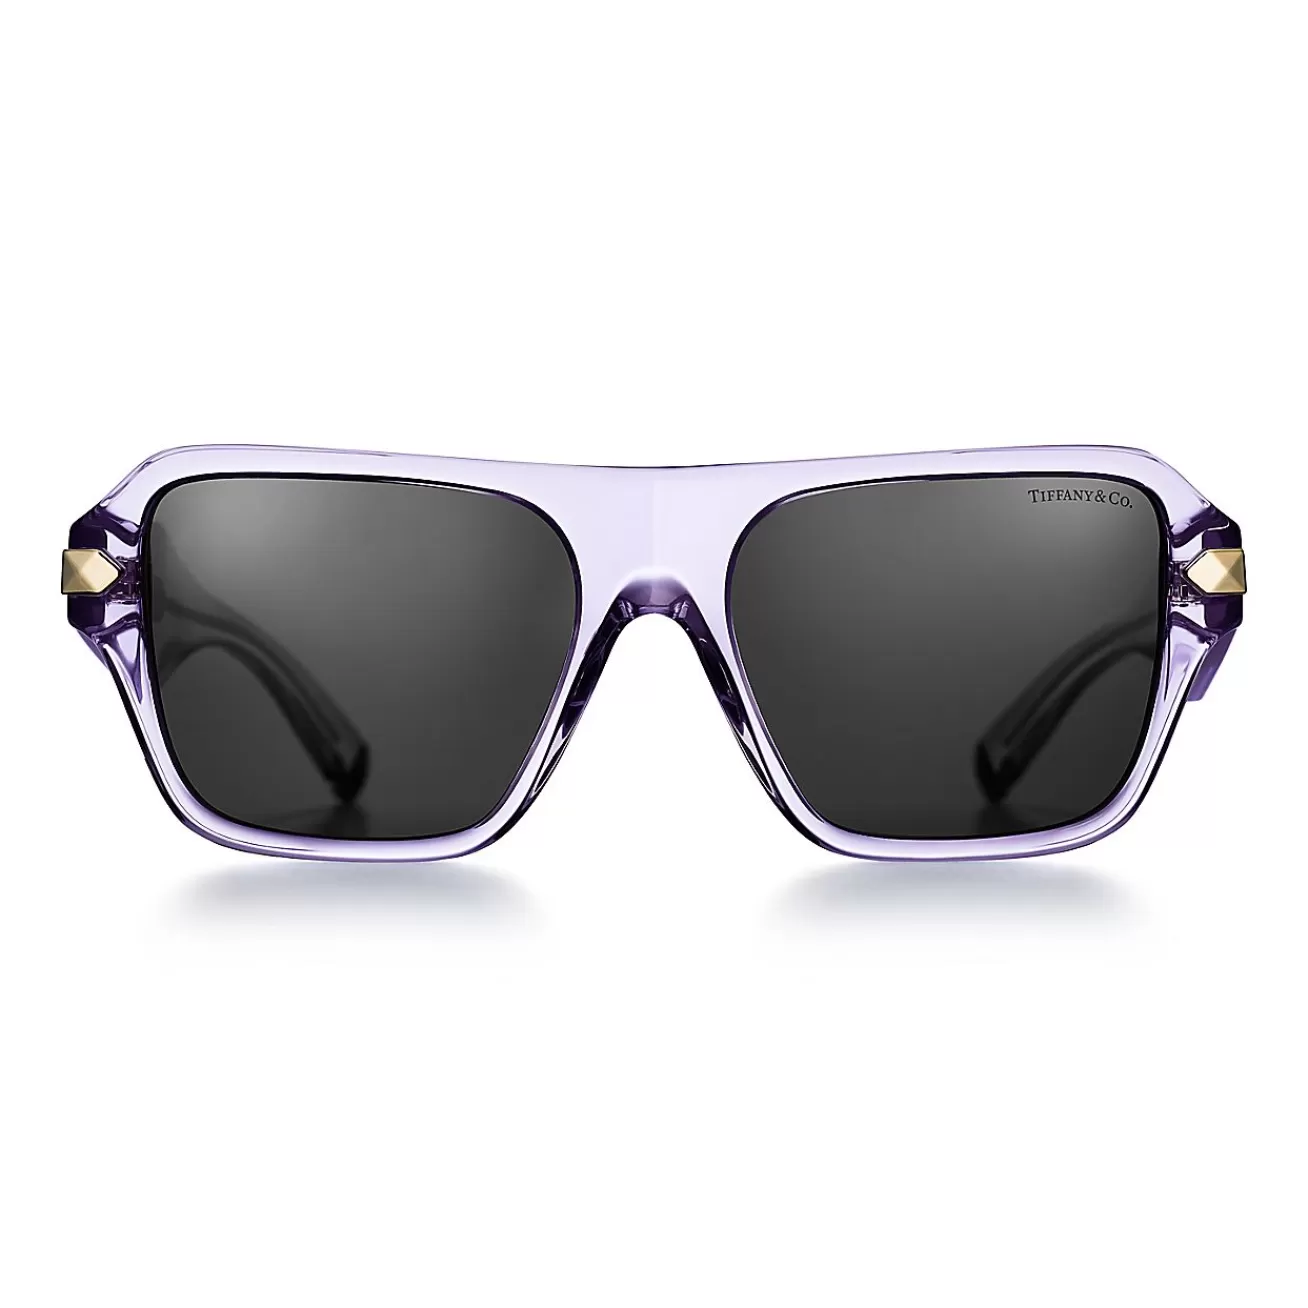 Tiffany & Co. Tiffany Sunglasses in Violet Acetate with Dark Gray Lenses | ^Women Sunglasses | Women's Accessories